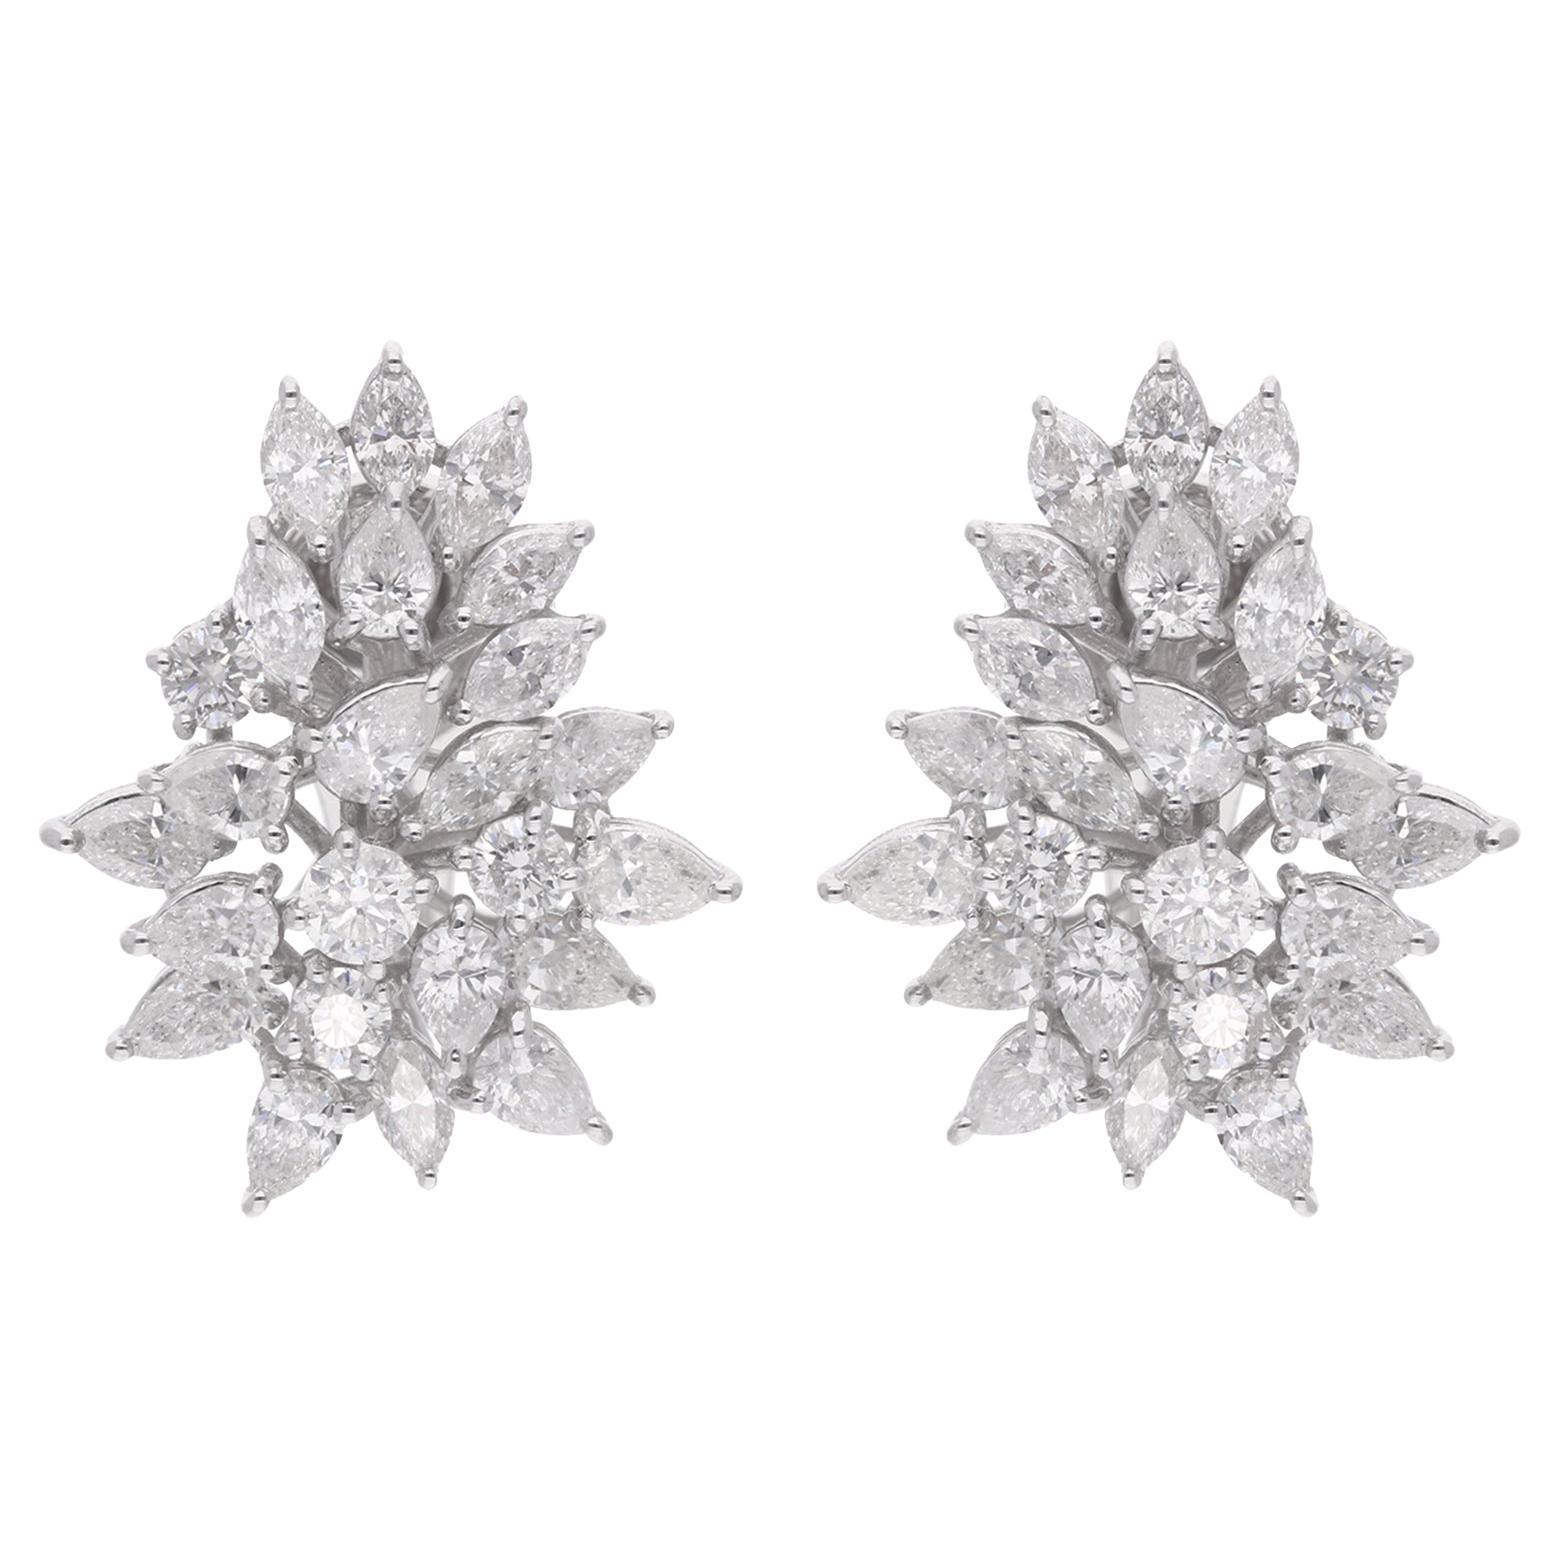 Natural 4.75 Carat Diamond Cluster Earrings 18 Karat White Gold Handmade Jewelry For Sale